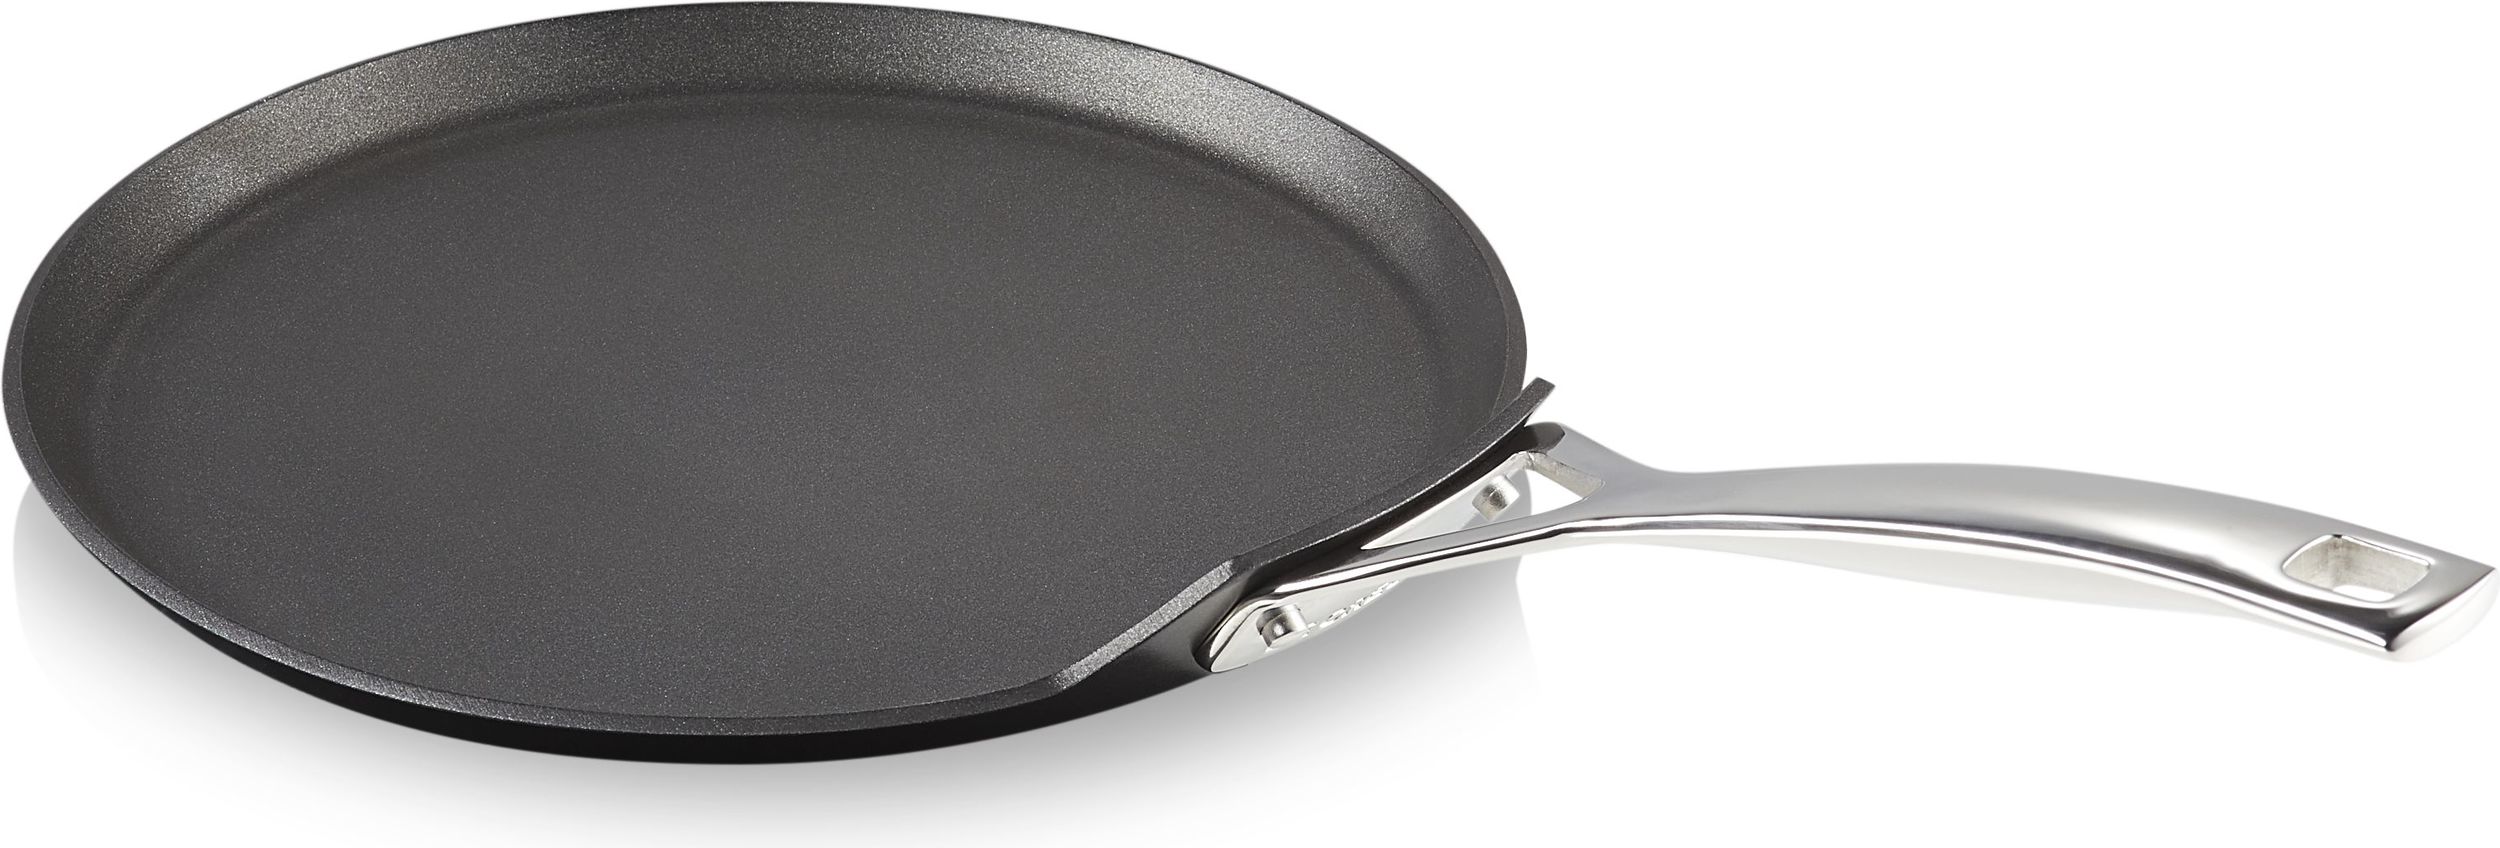 Le Creuset Pancake Pan matt black